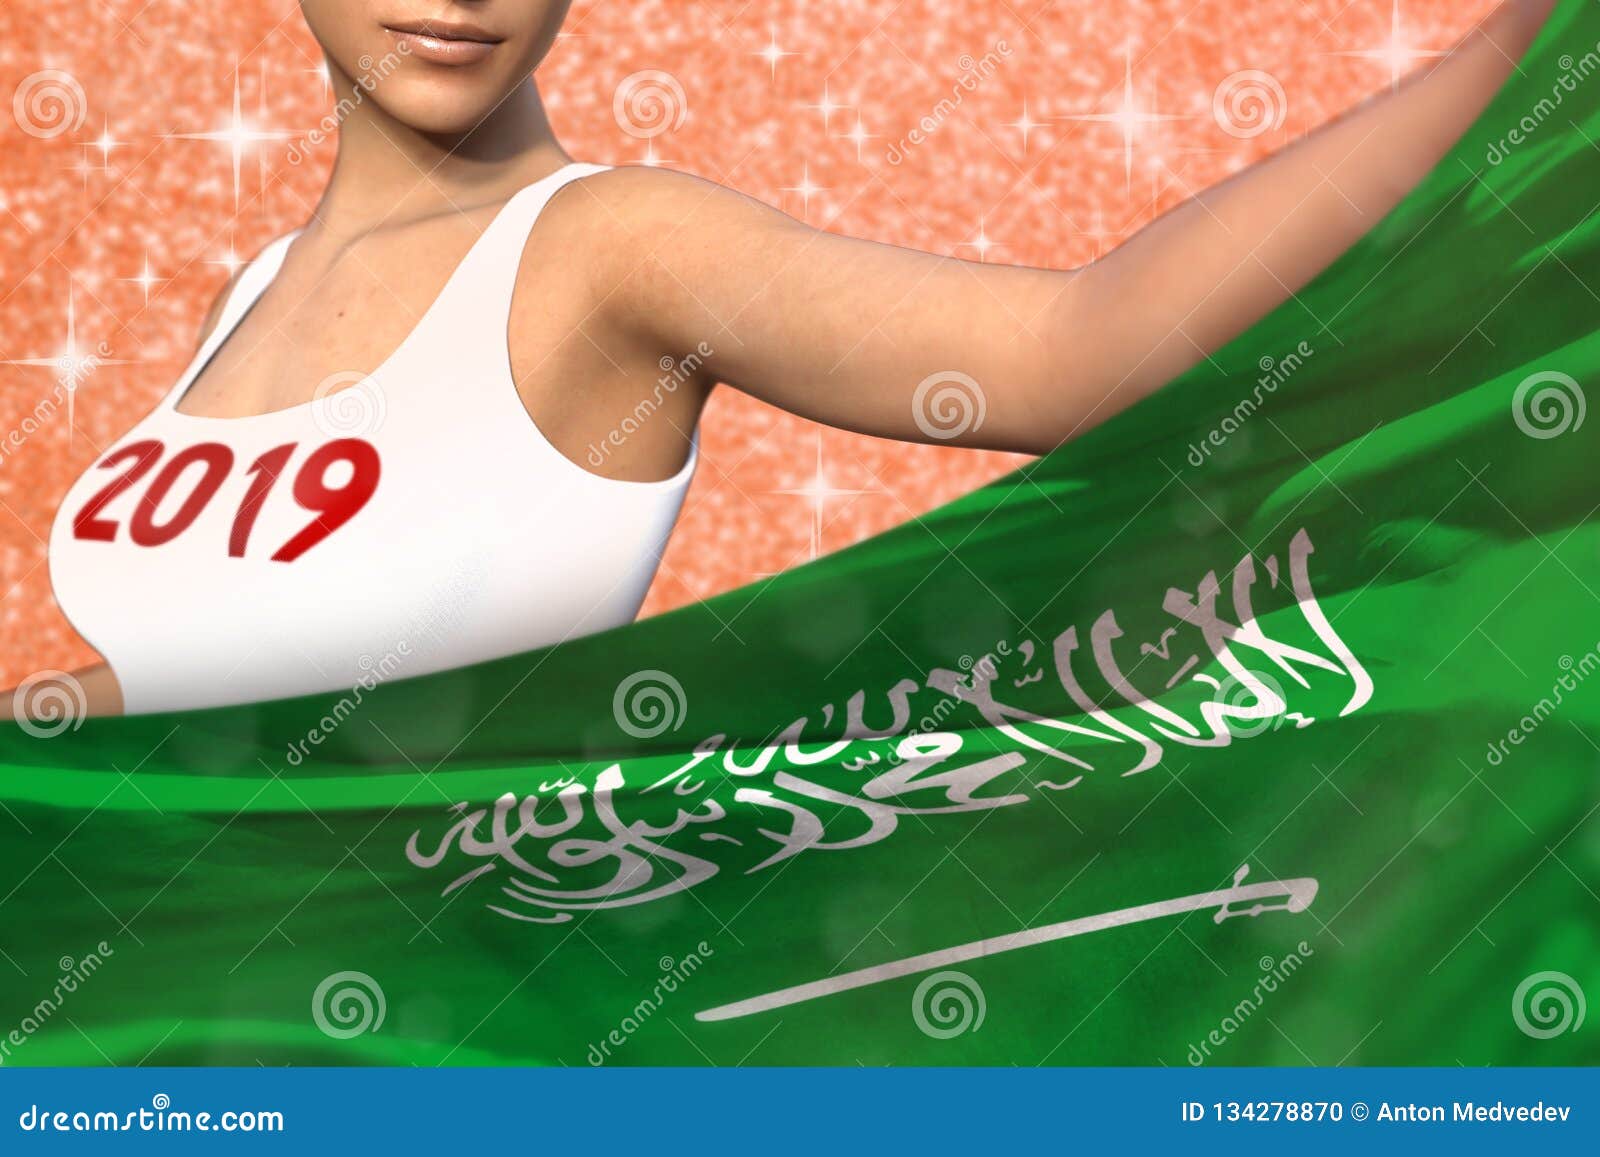 Saudi arabia hot girls